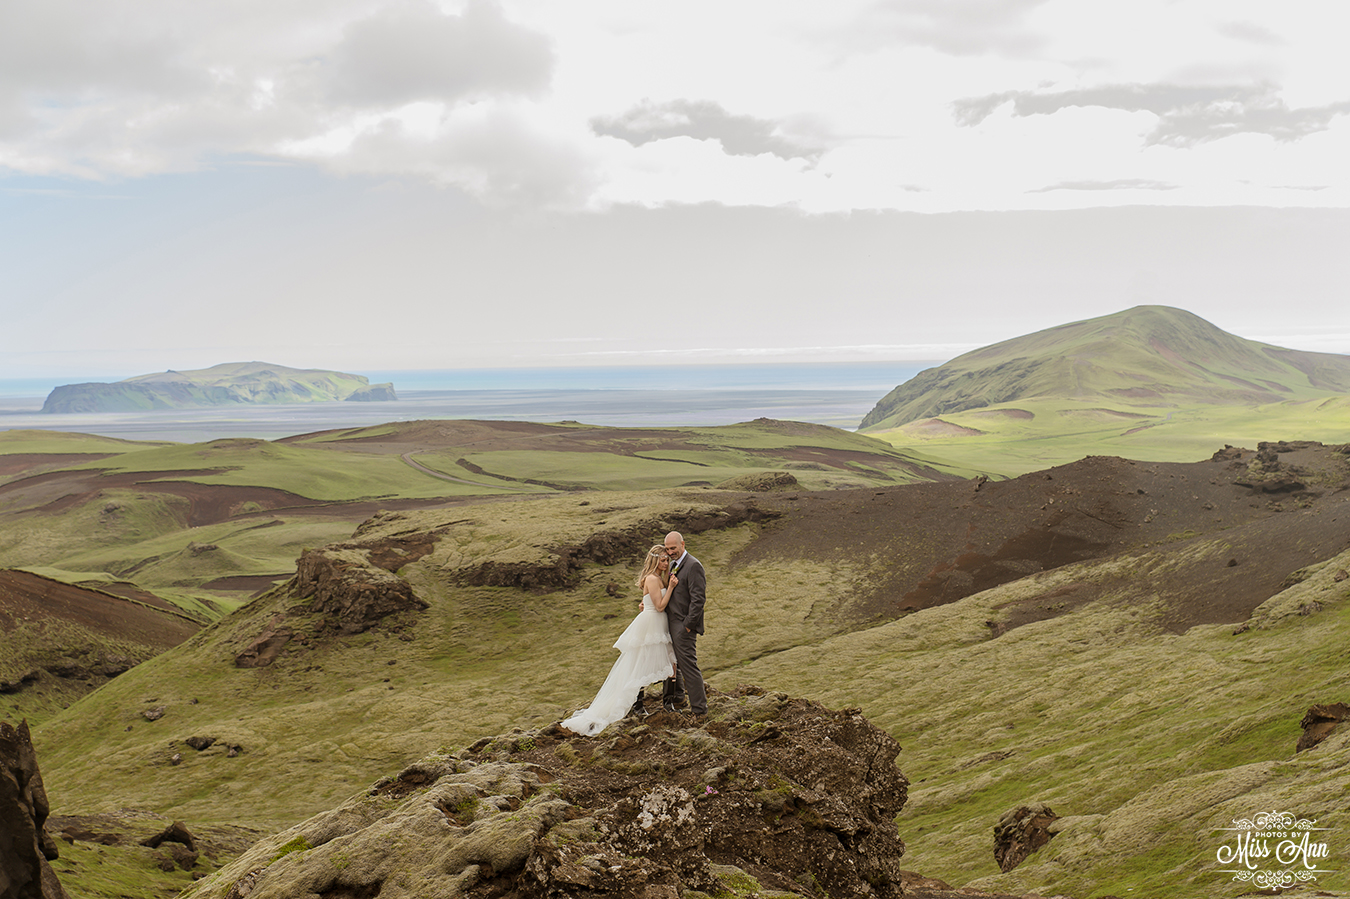 Best Iceland Wedding Photographer - Photos by Miss Ann